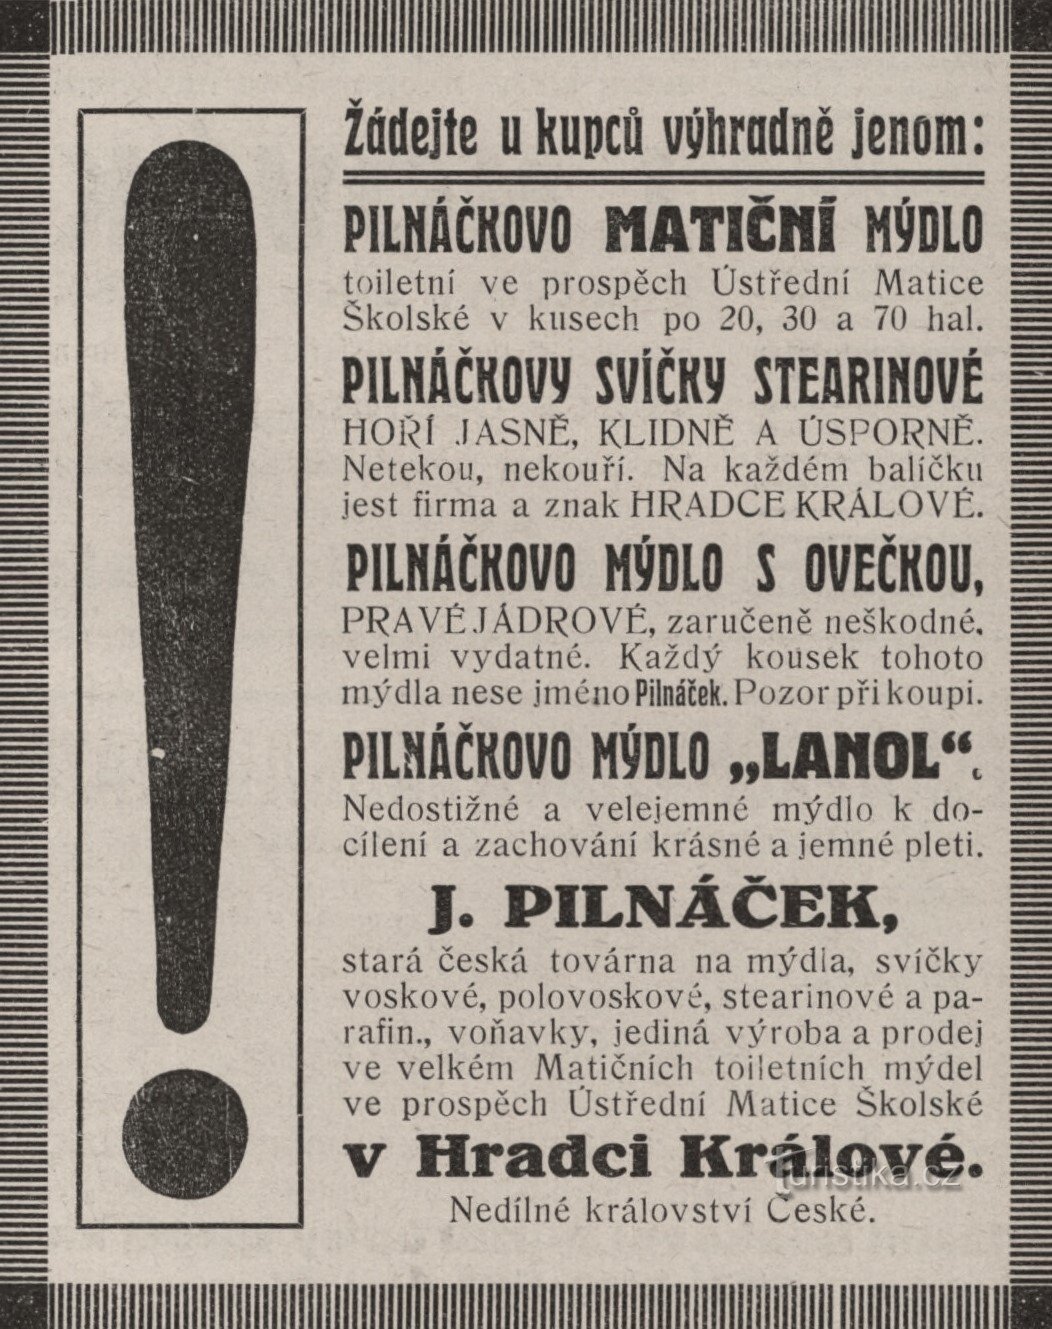 Werbung des Werkes Pilnáček aus dem Jahr 1912